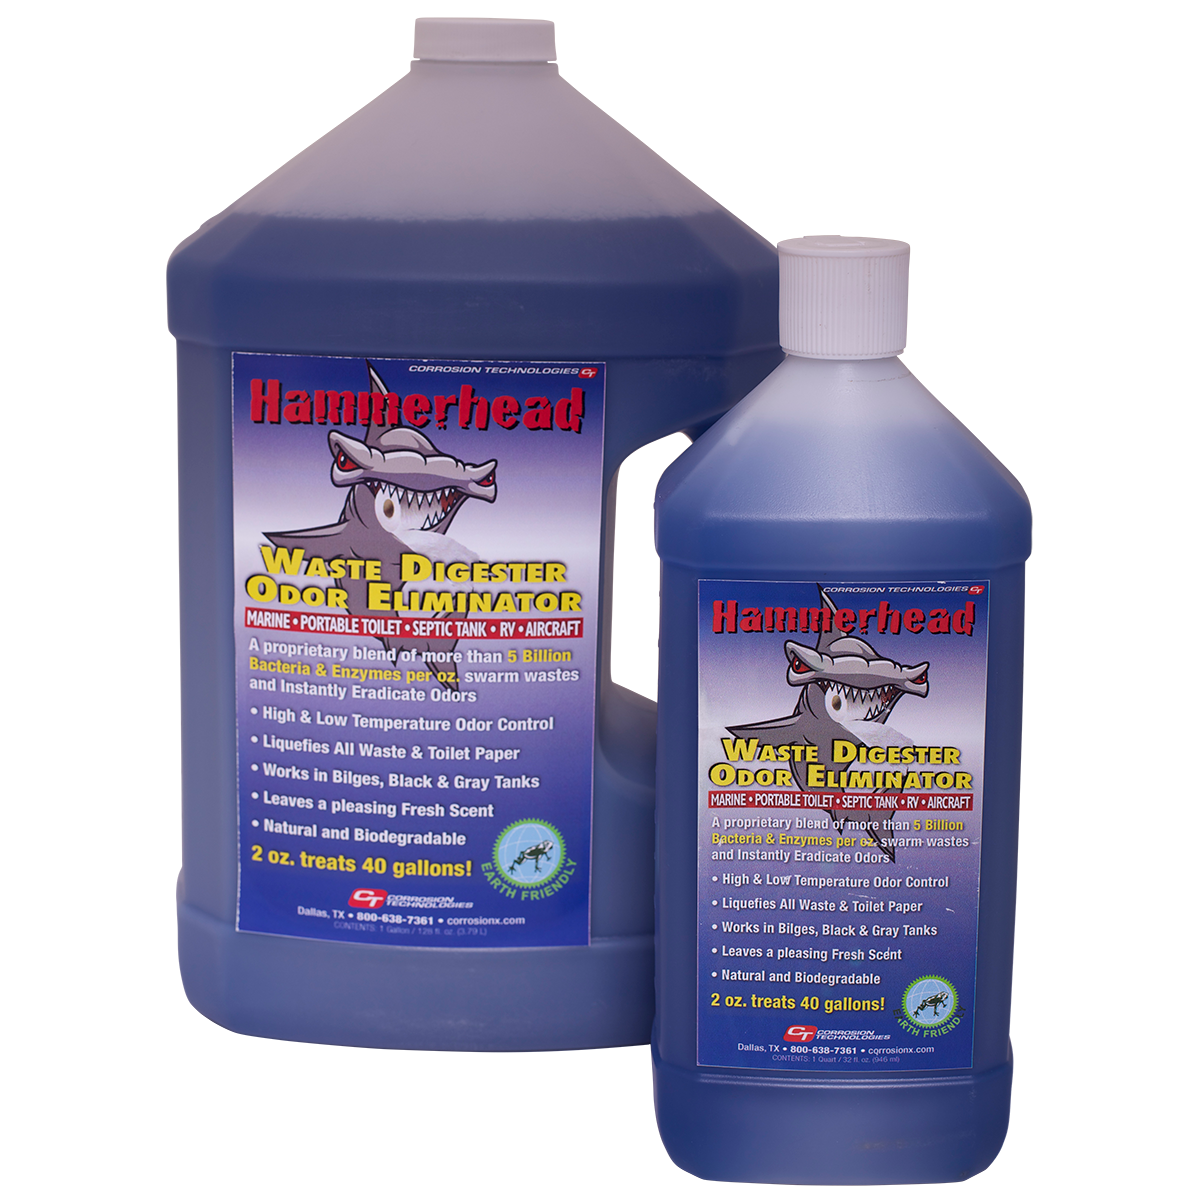 Hammerhead waste digester / odor eliminator